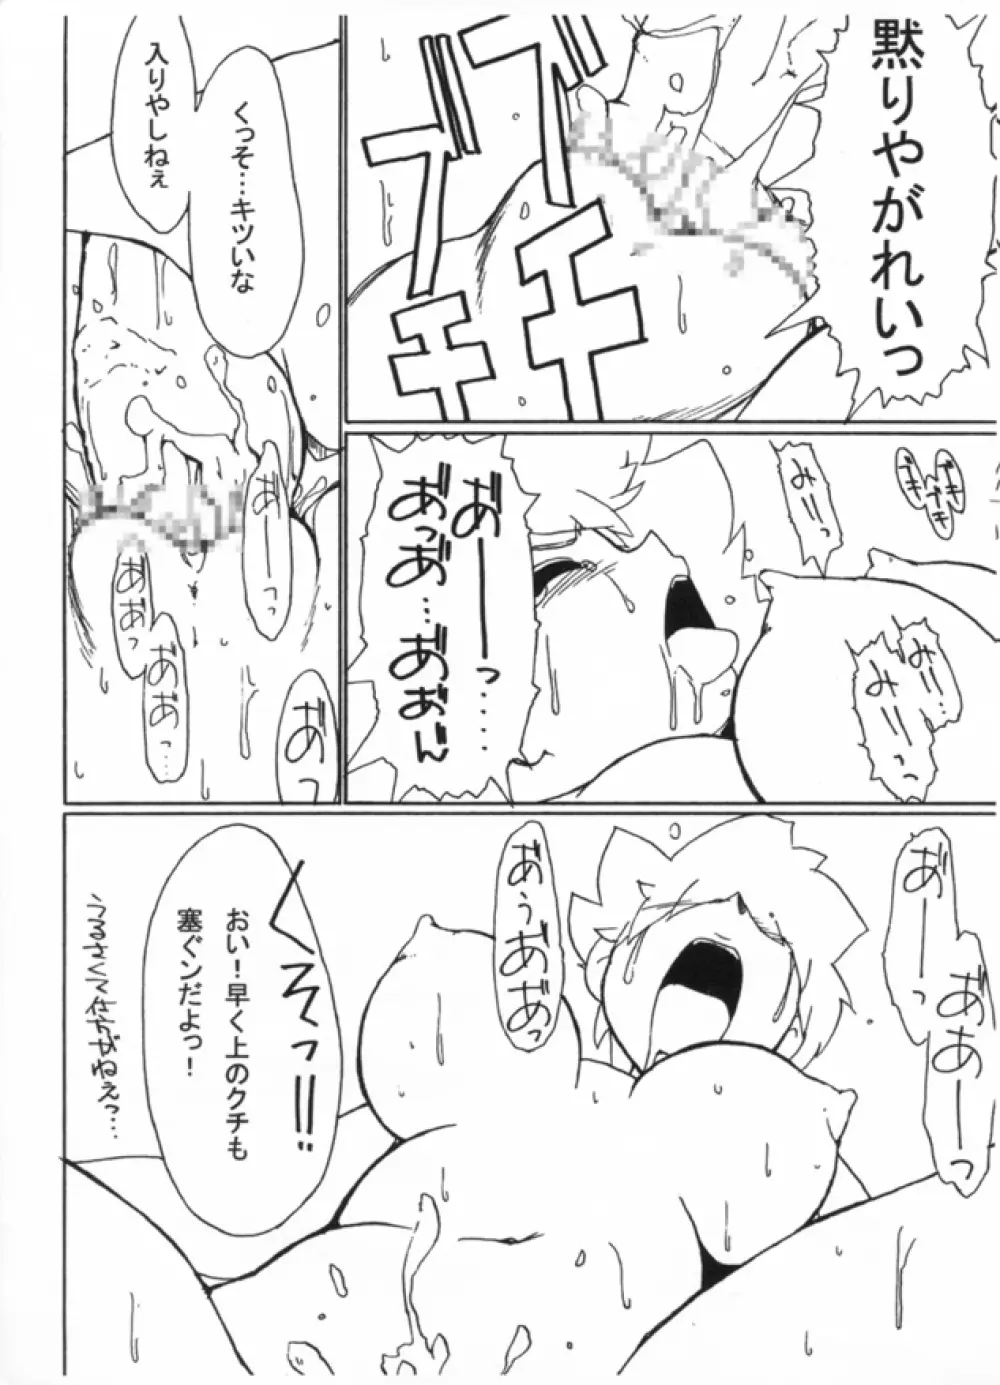 KASUMIX XPLOSION Kasumi Comic part5 - page56